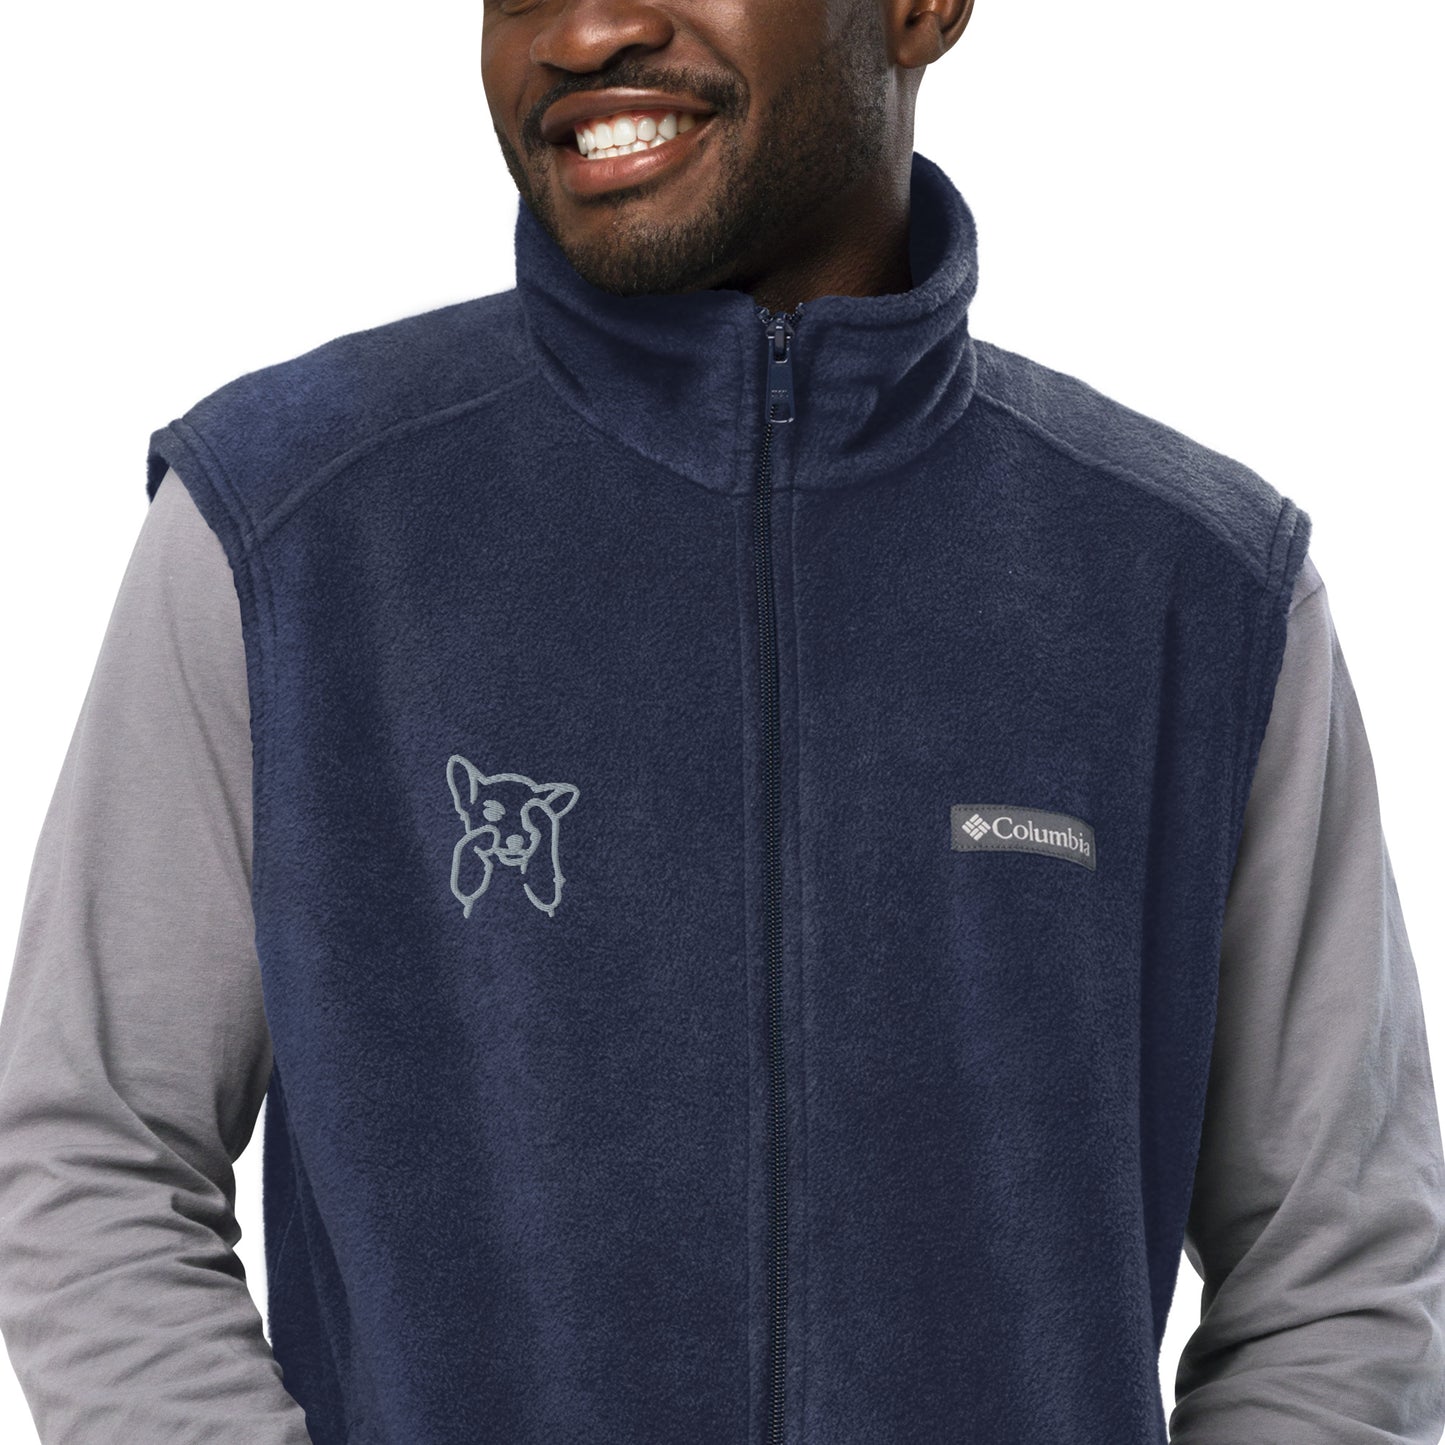 Men’s Columbia fleece vest , flat embroidery, grey color cute dog sketch